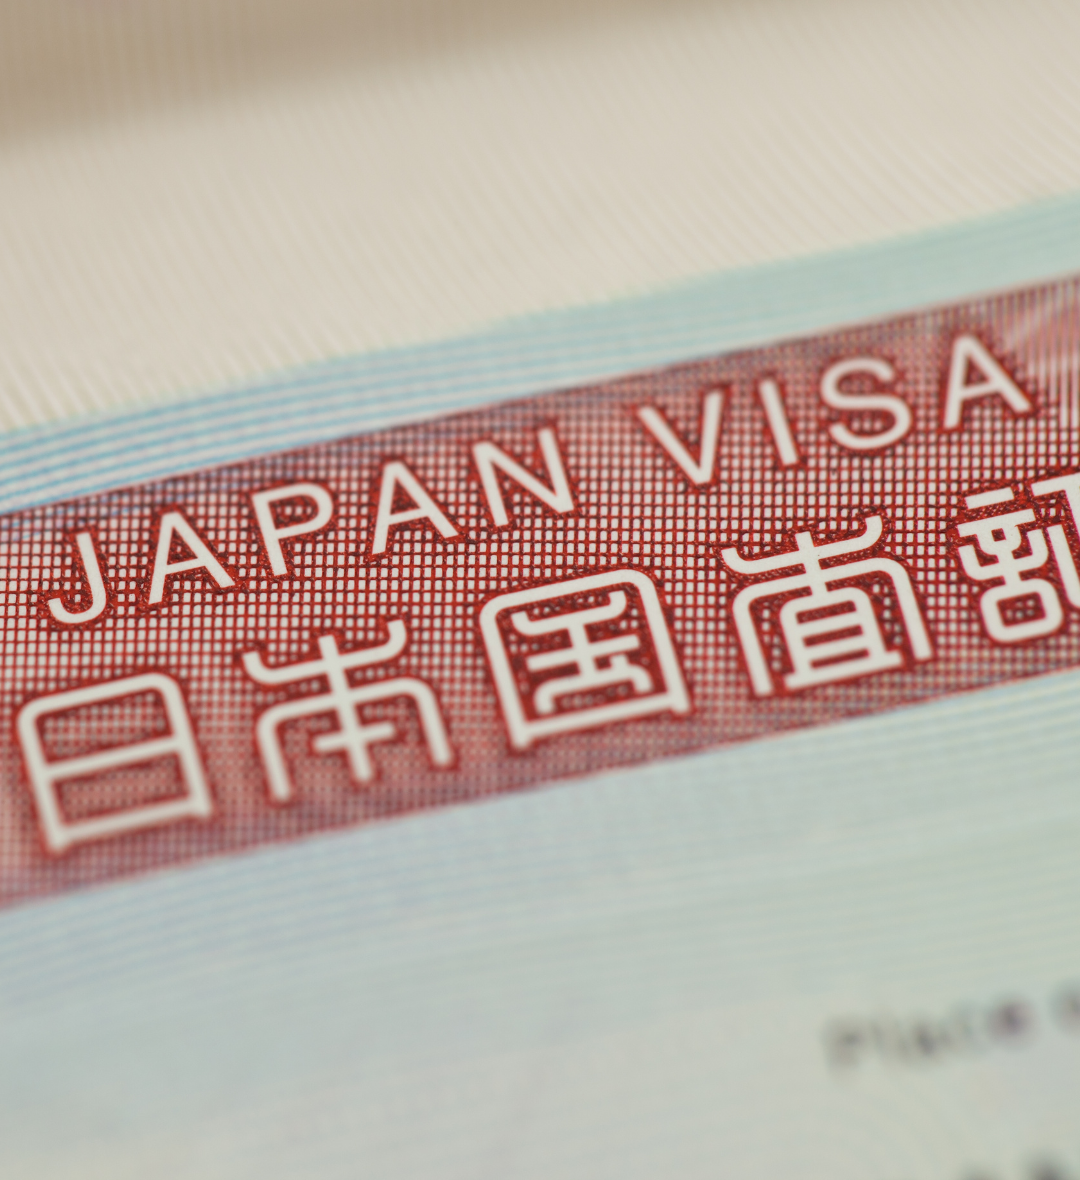 Japan Visa, Japan Visa with COE, Visa with Certificate of Eligibility, Japan Visa Residential Status